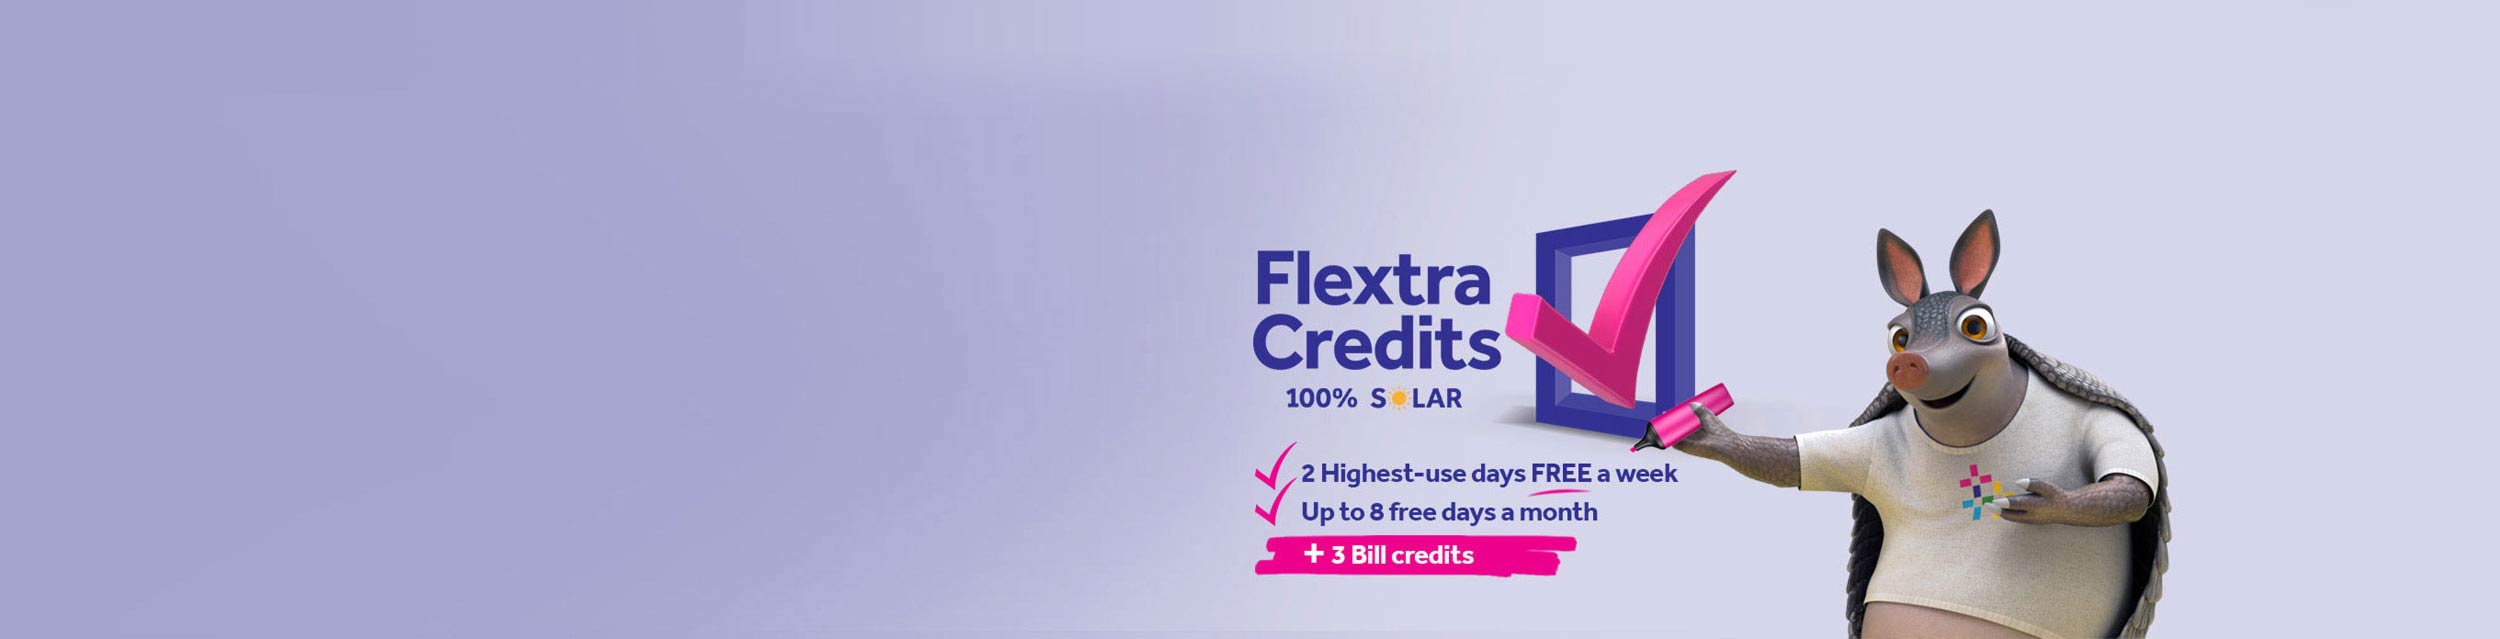 Flextra Credits 100% Solar
